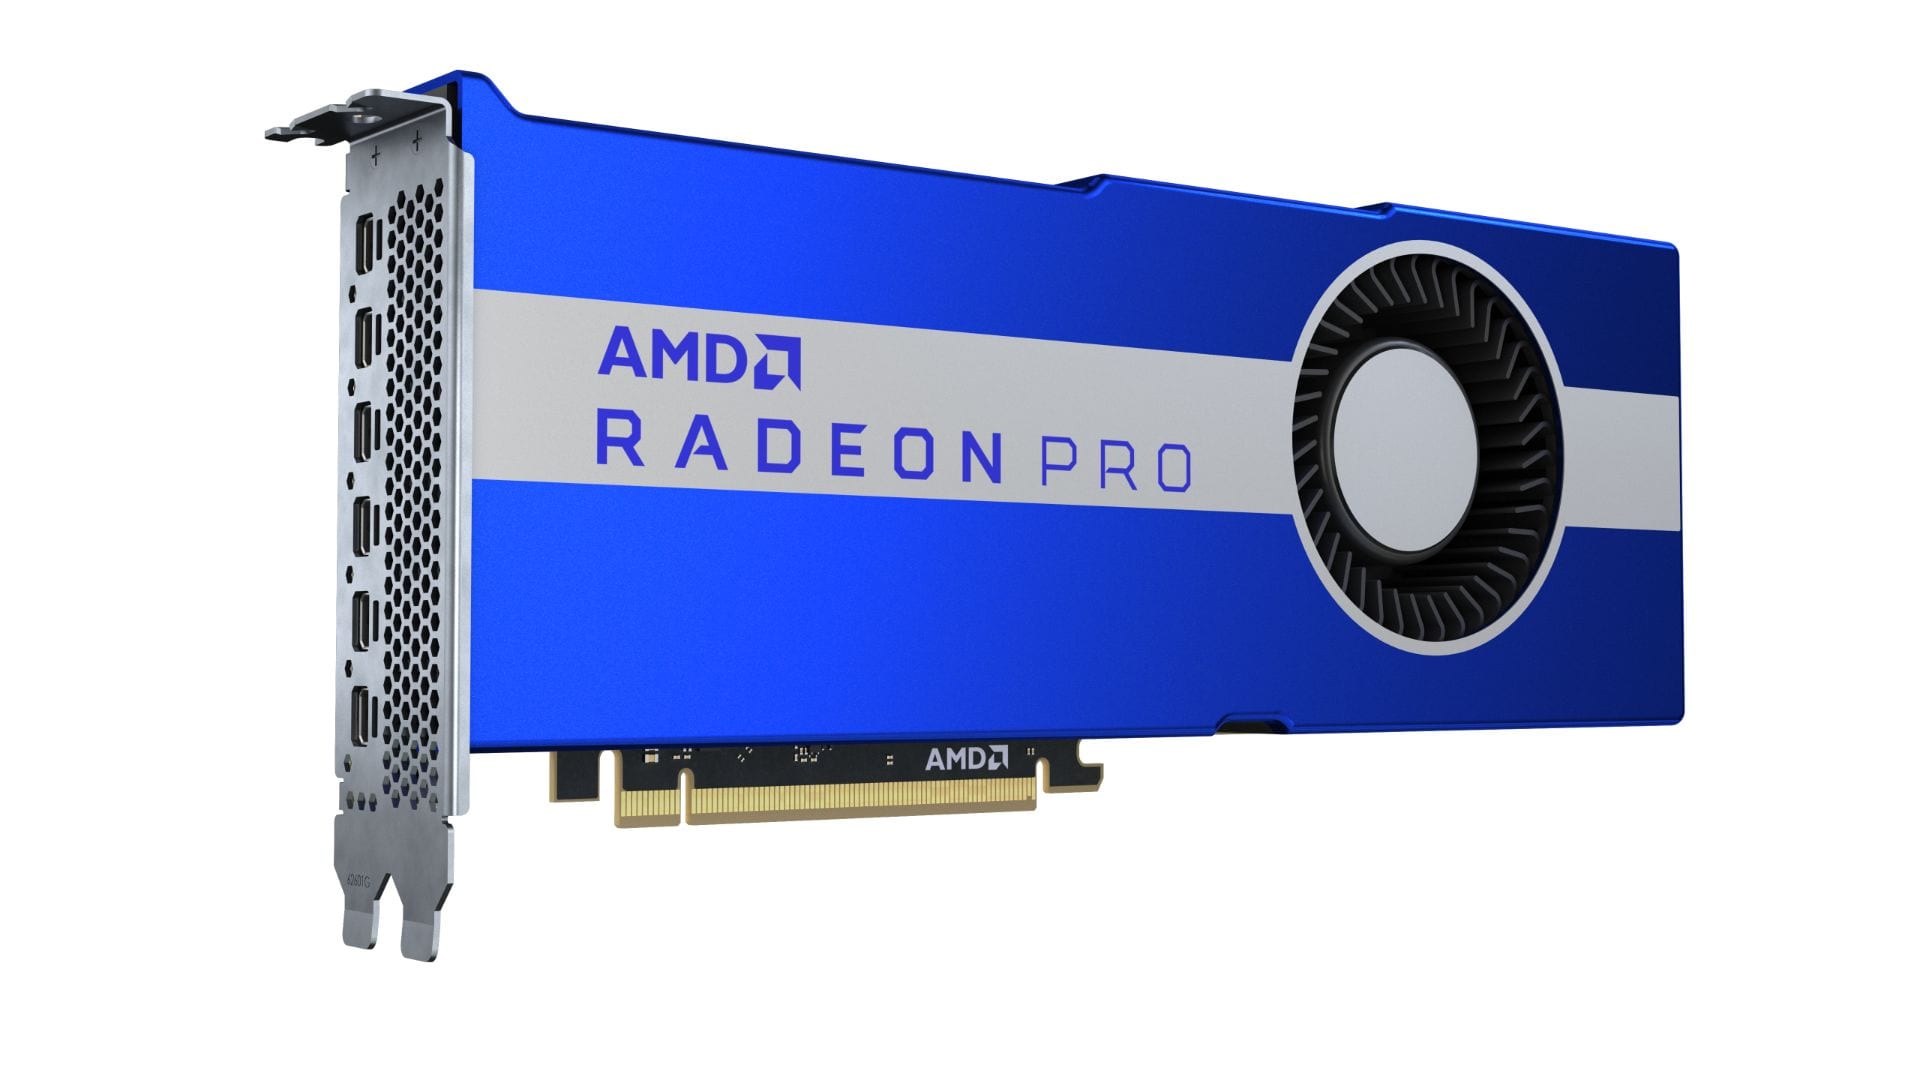 AMD Radeon Pro GPU